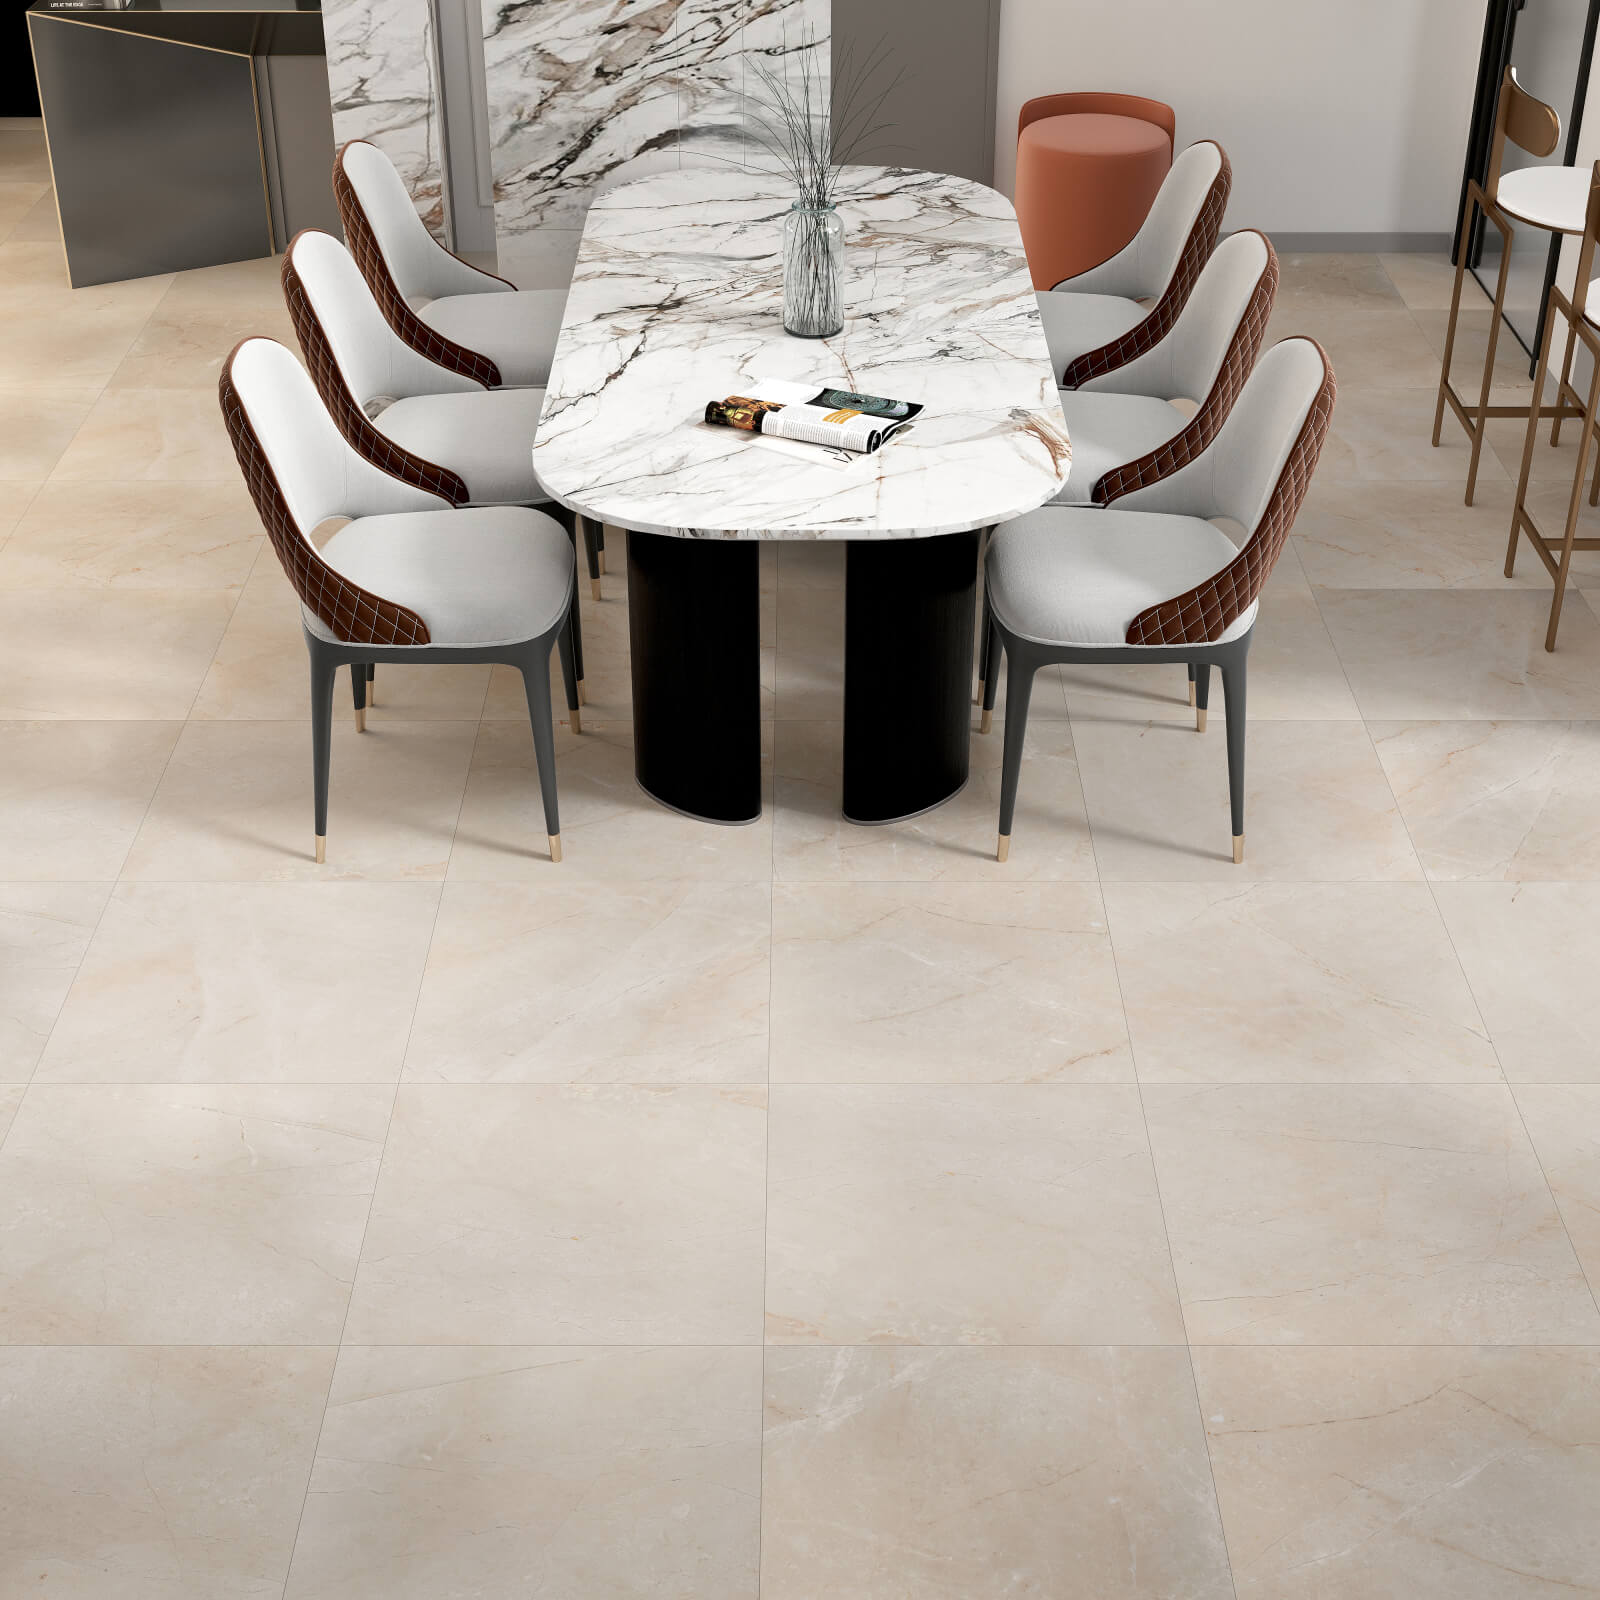 Crema Marfil Premium Marble Tile - Honed